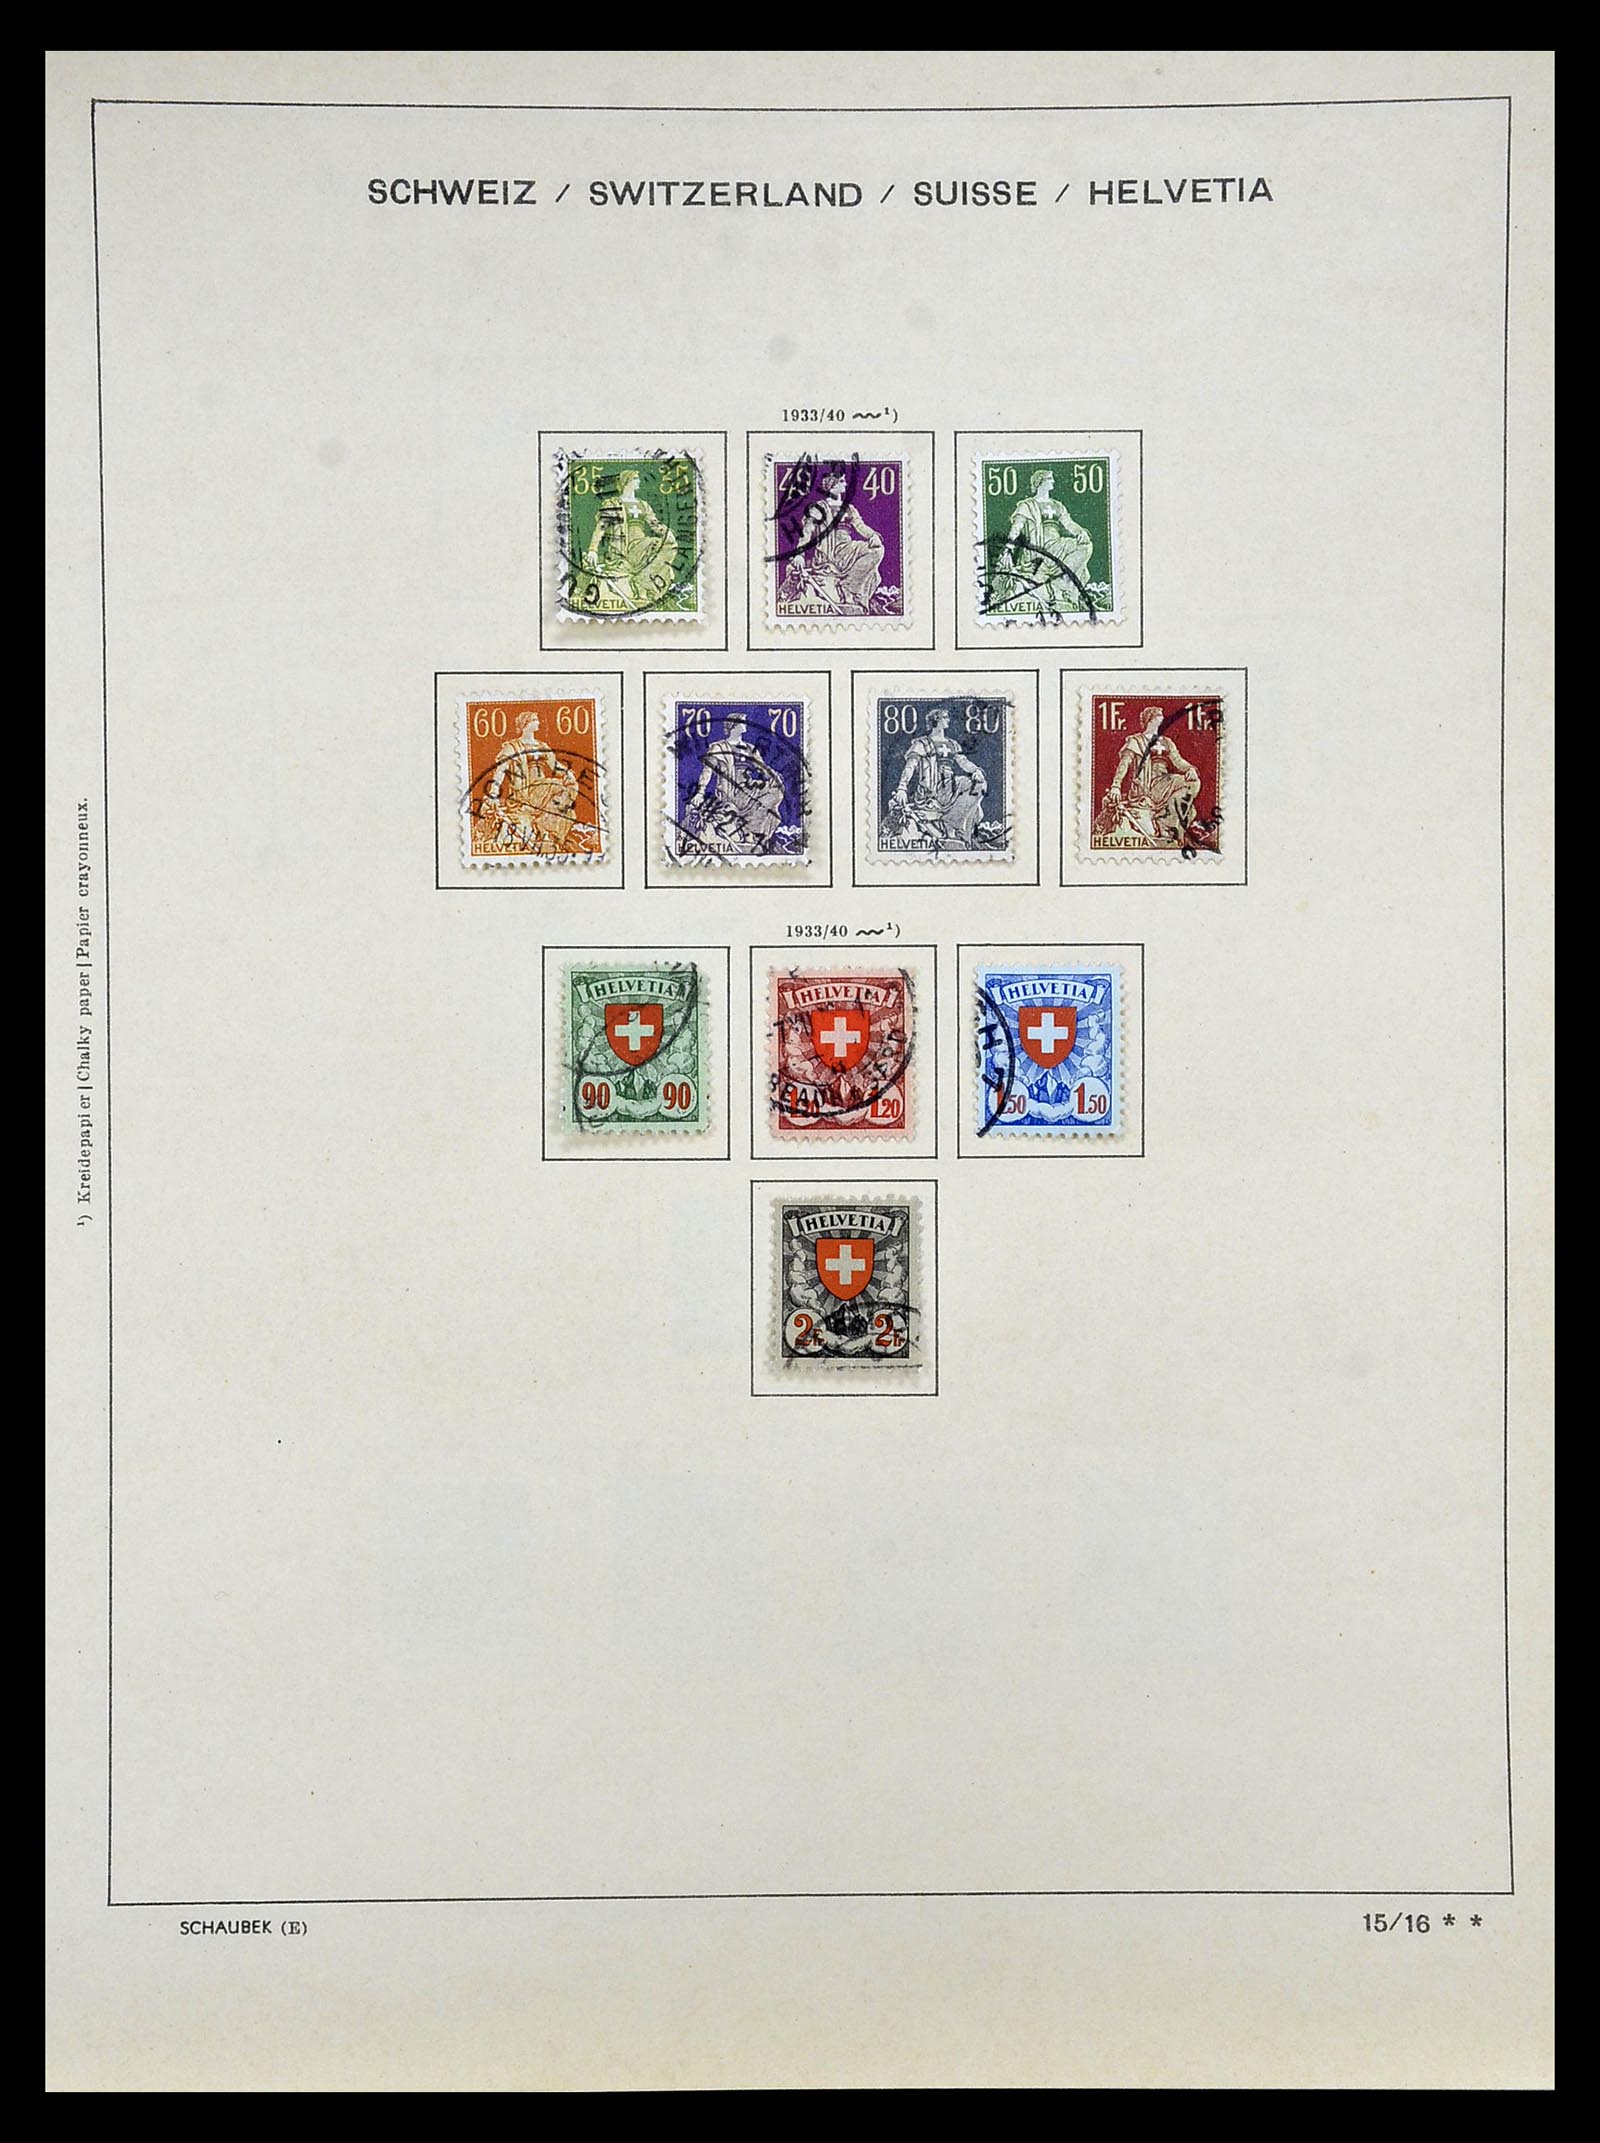 35073 015 - Stamp Collection 35073 Switzerland 1862-1992.